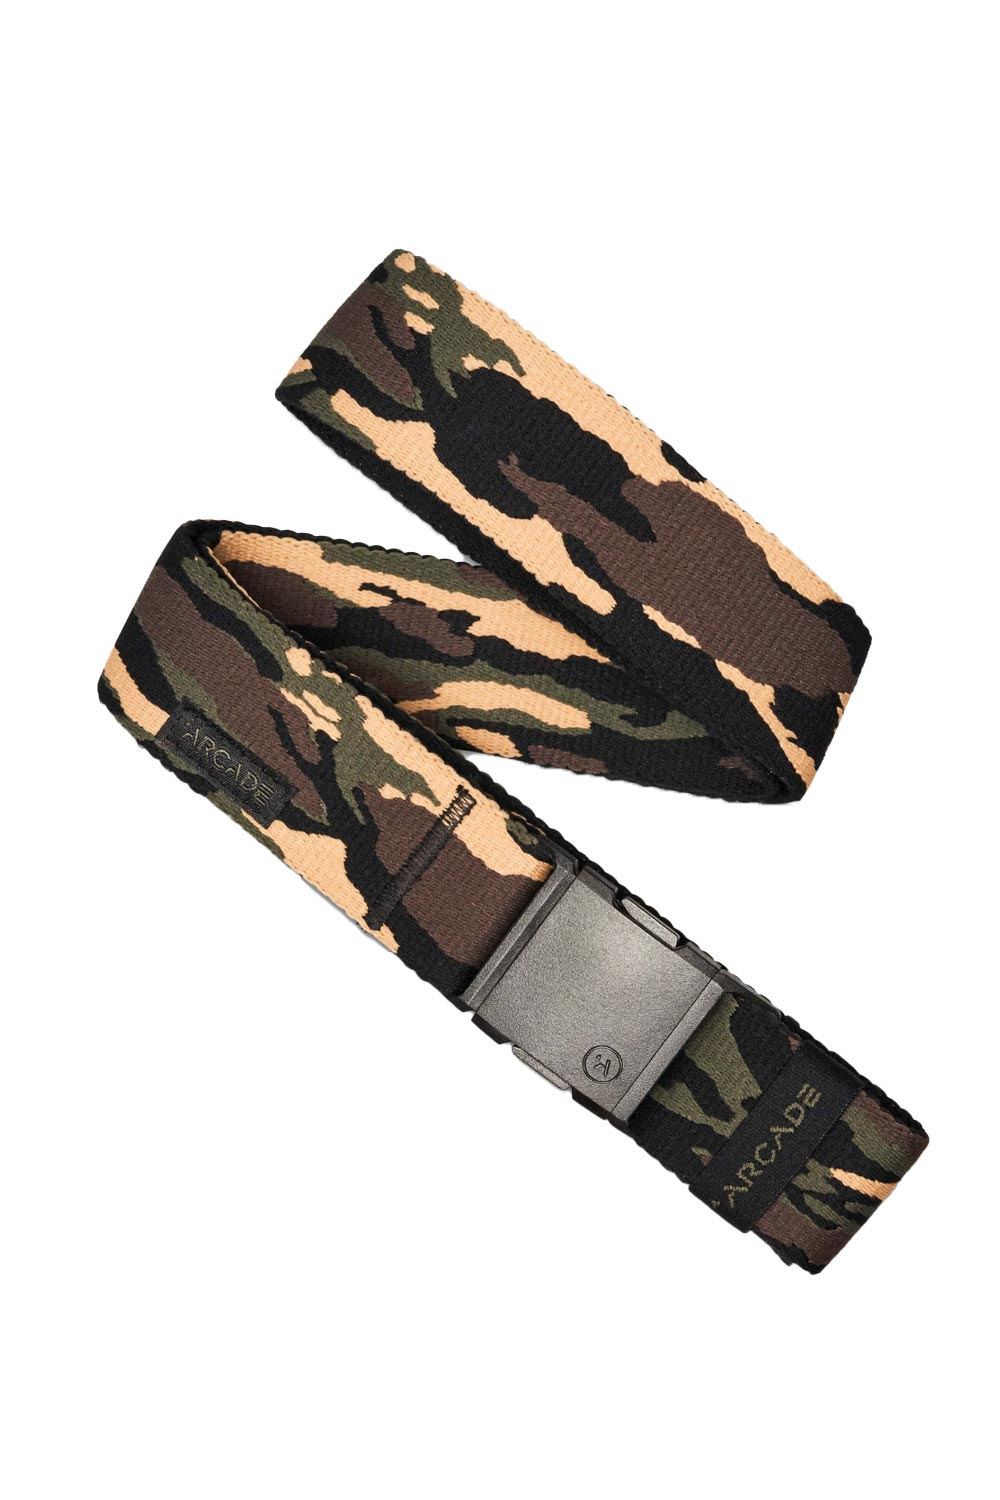 Arcade Belts - Terroflage Belt